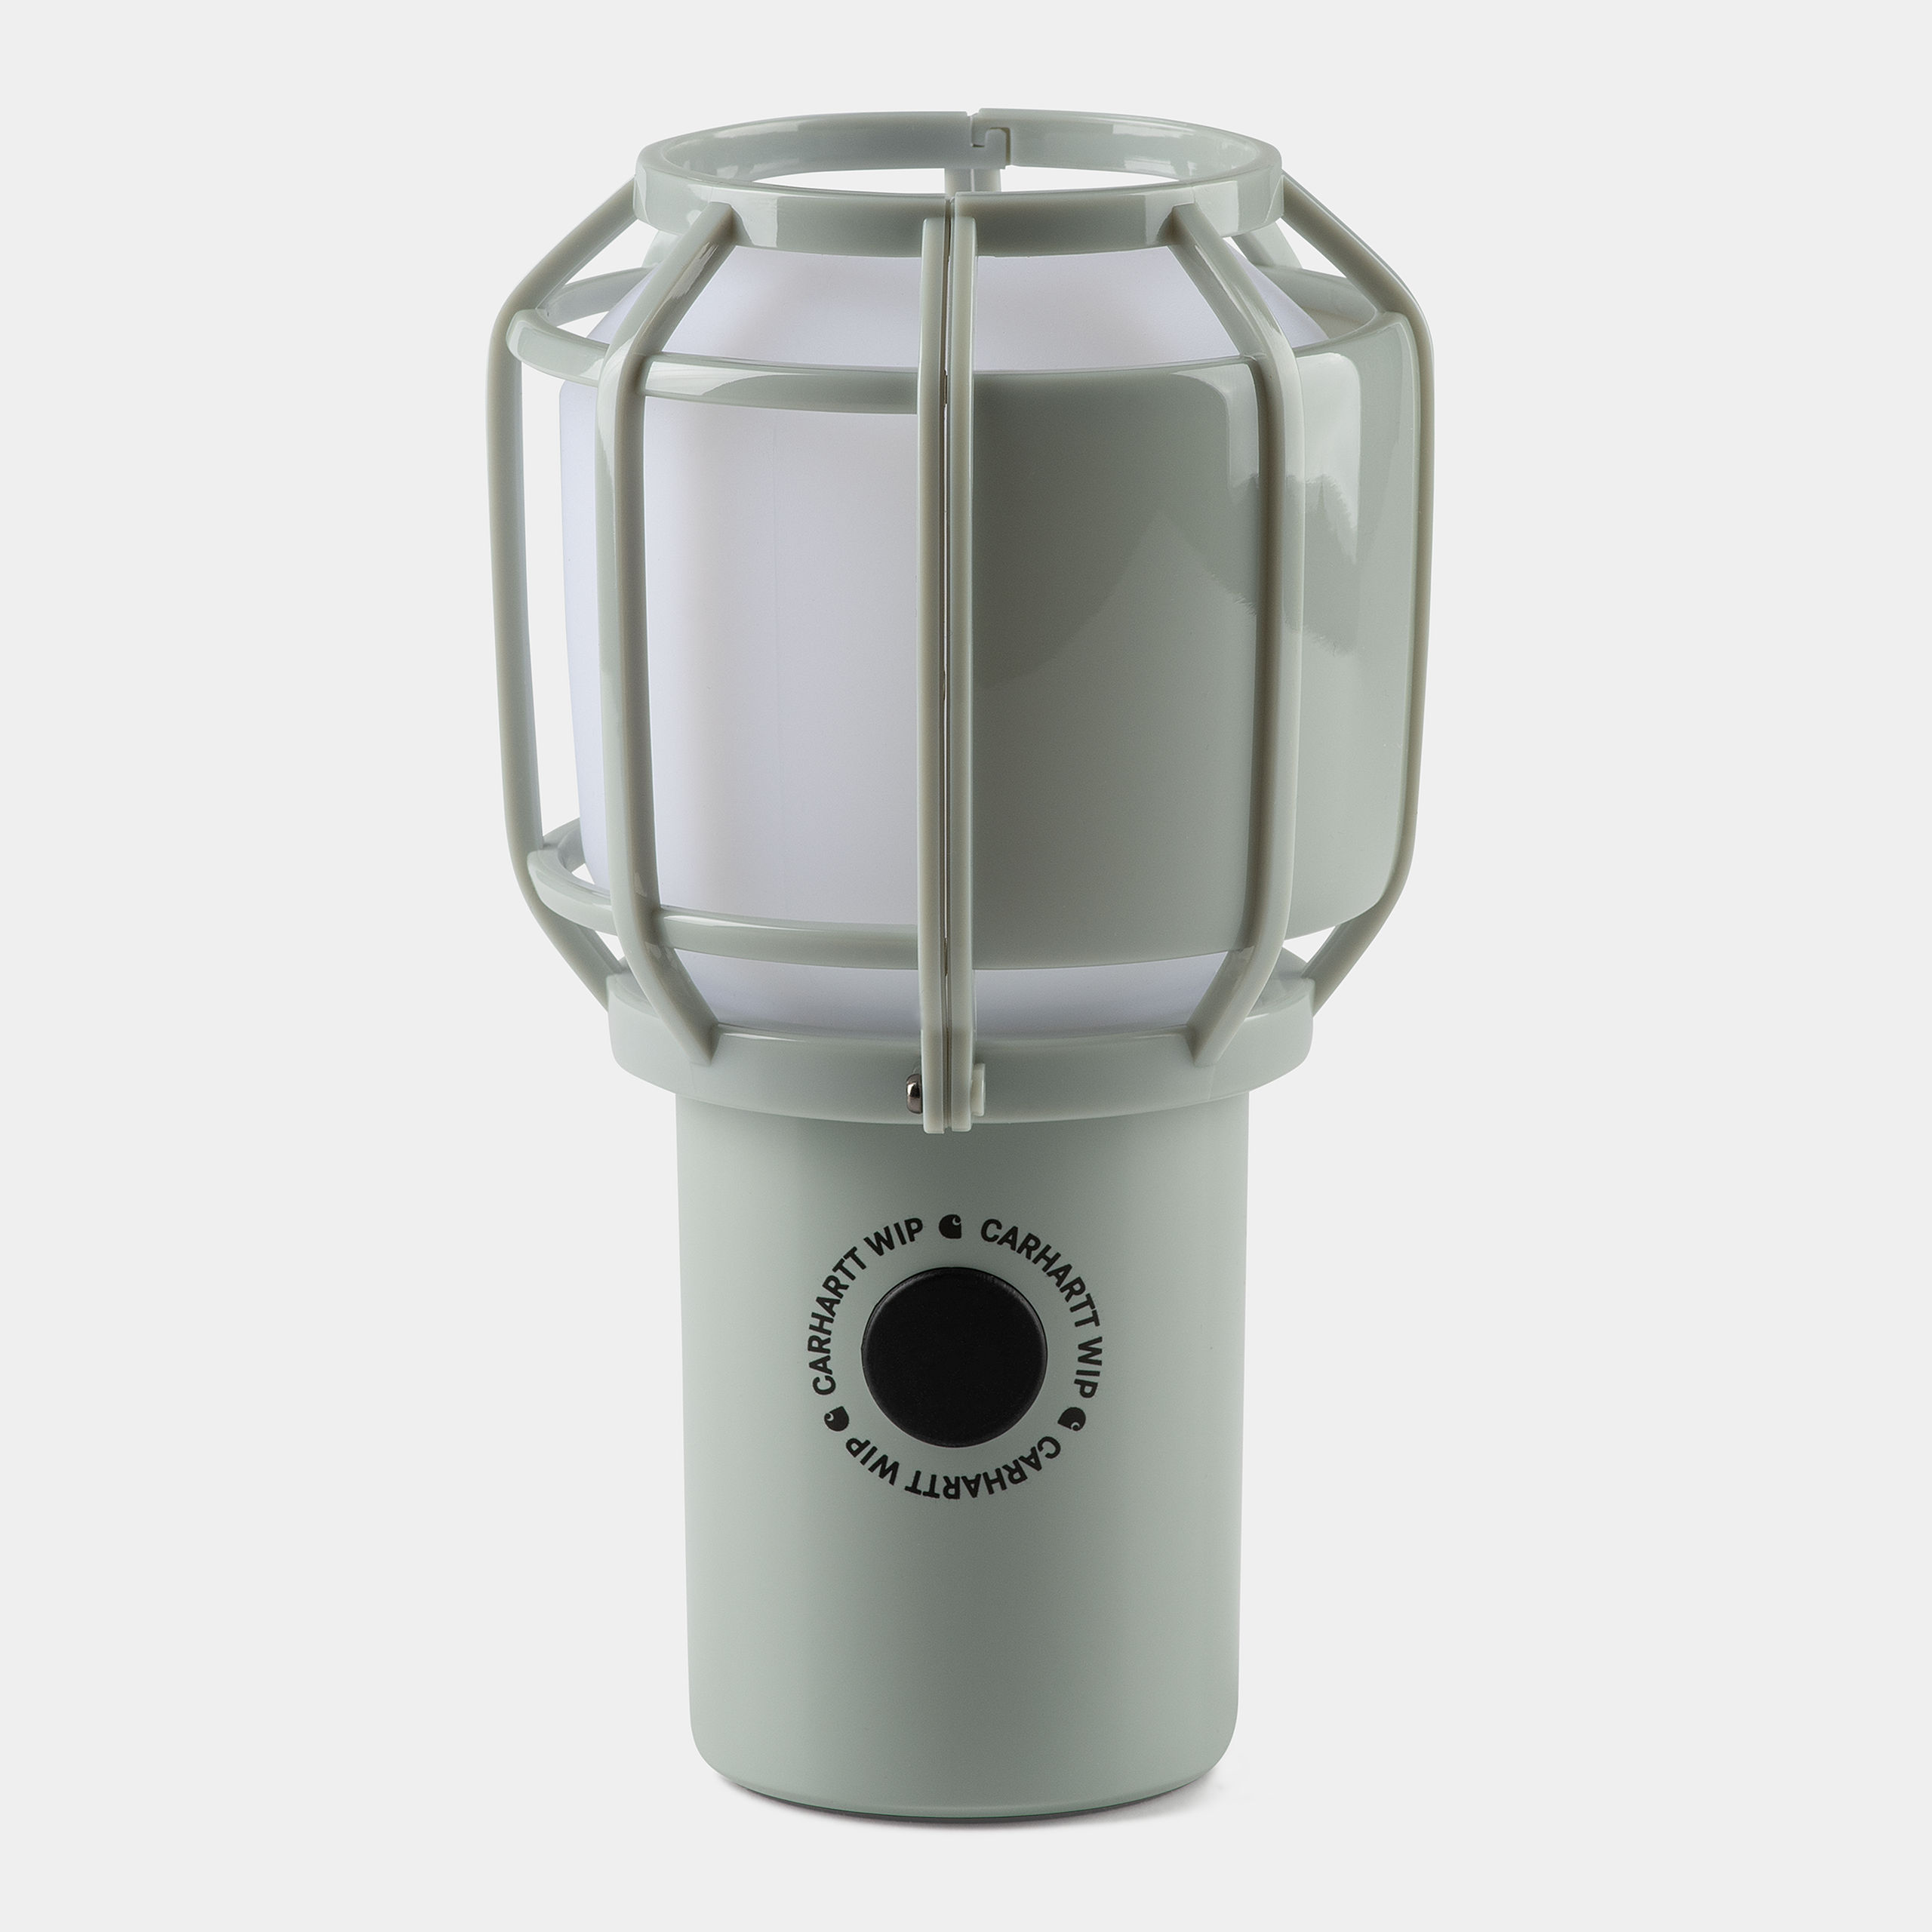 Marset for Carhartt WIP - CHISPA LAMP BY JOAN GASPAR - Yucca/Black